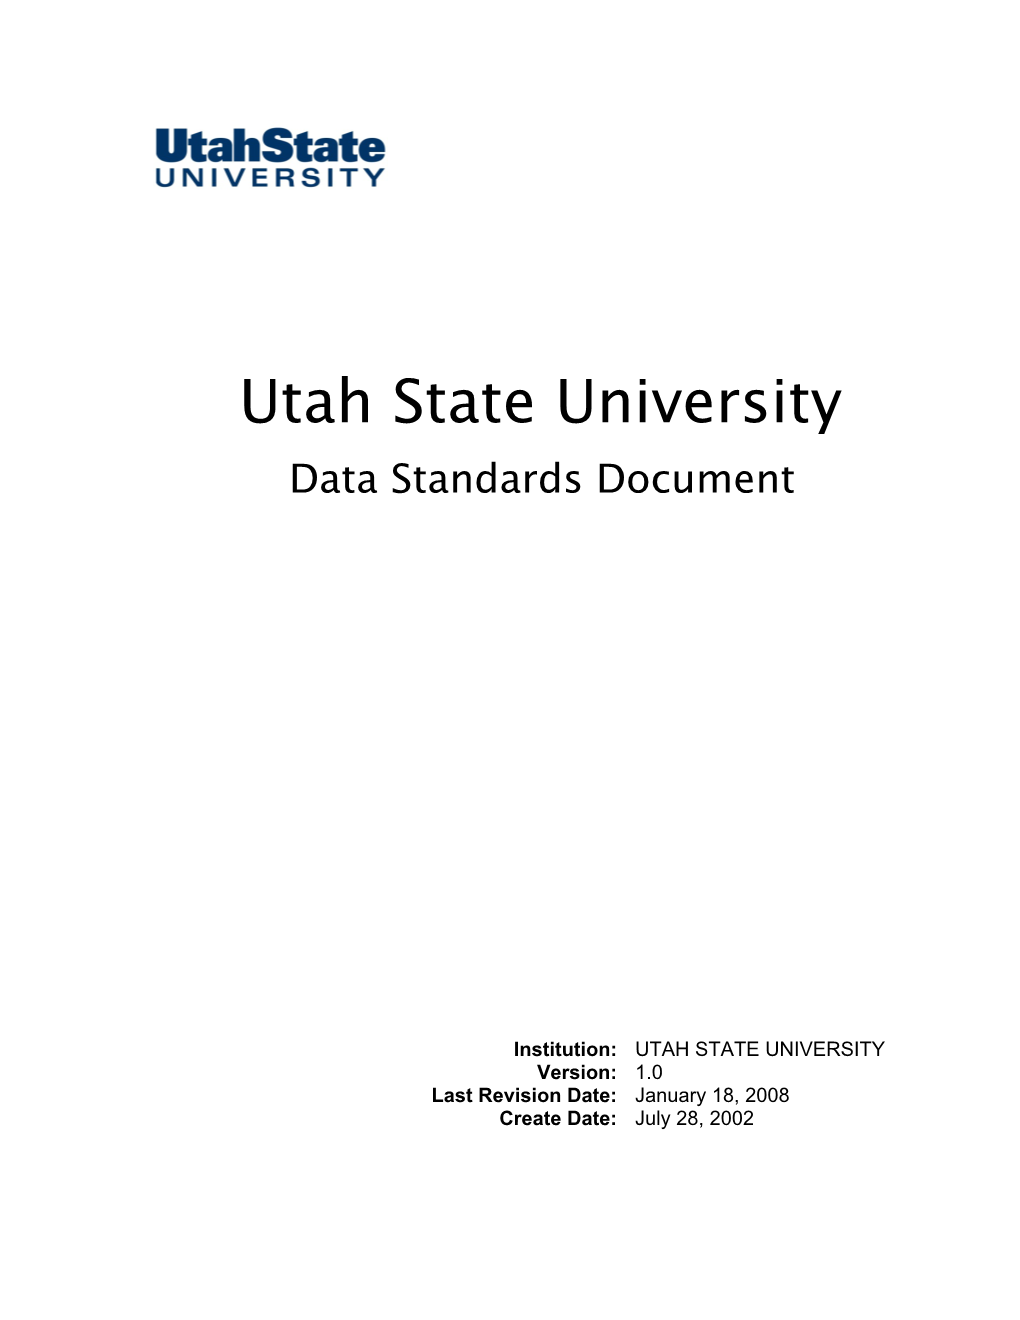 USU Data Standards